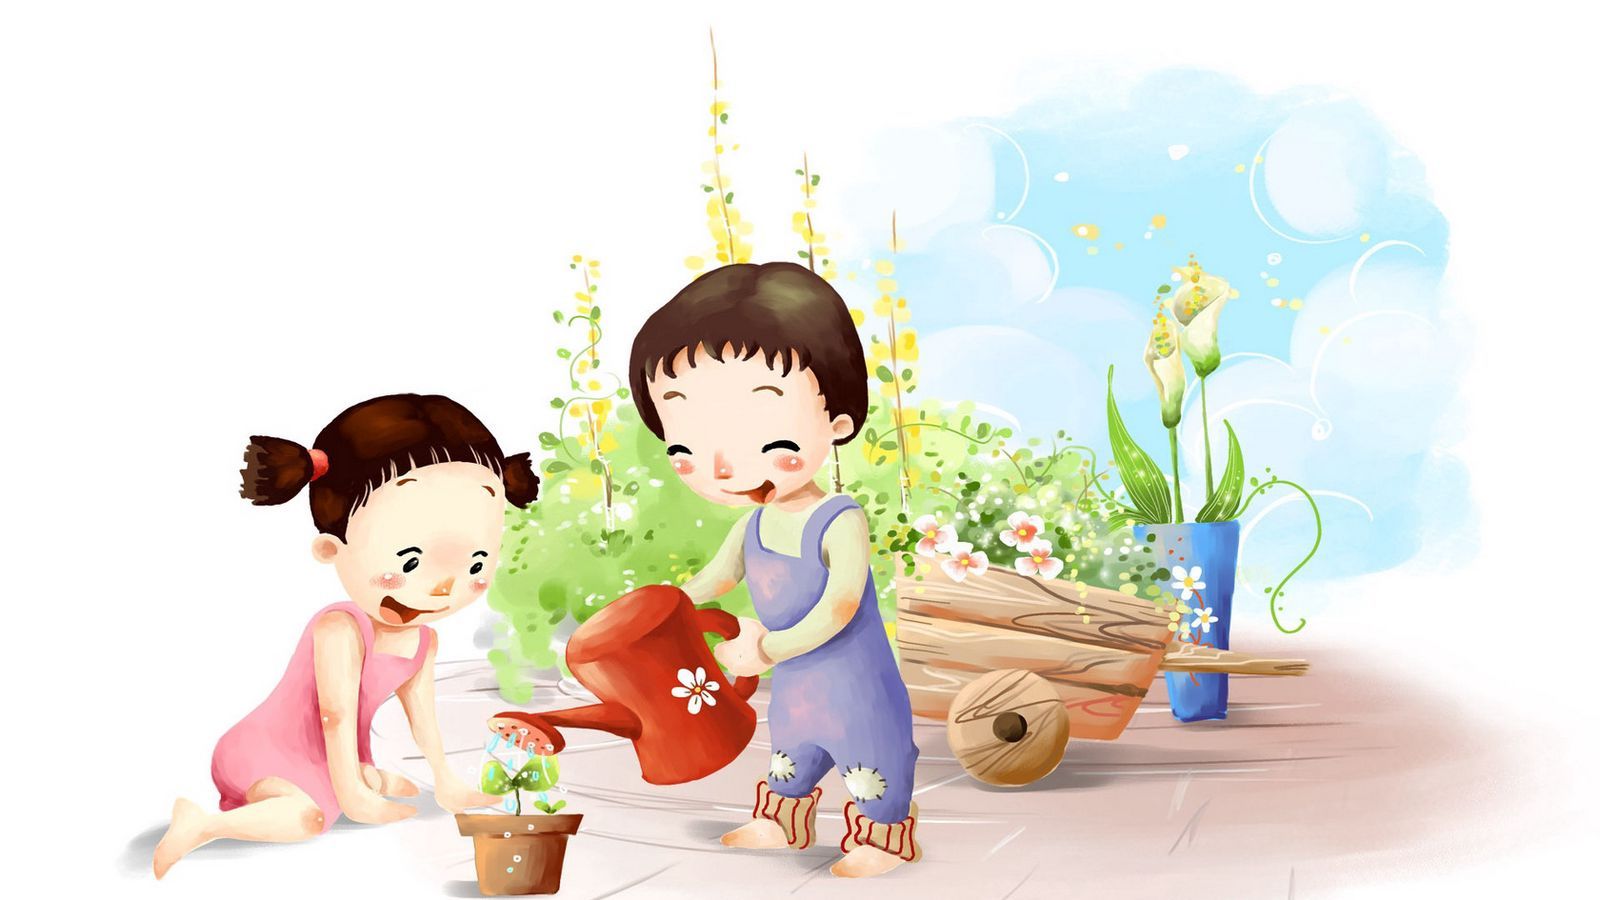 Download wallpaper 1600x900 flower, children, watering widescreen 16:9 HD background